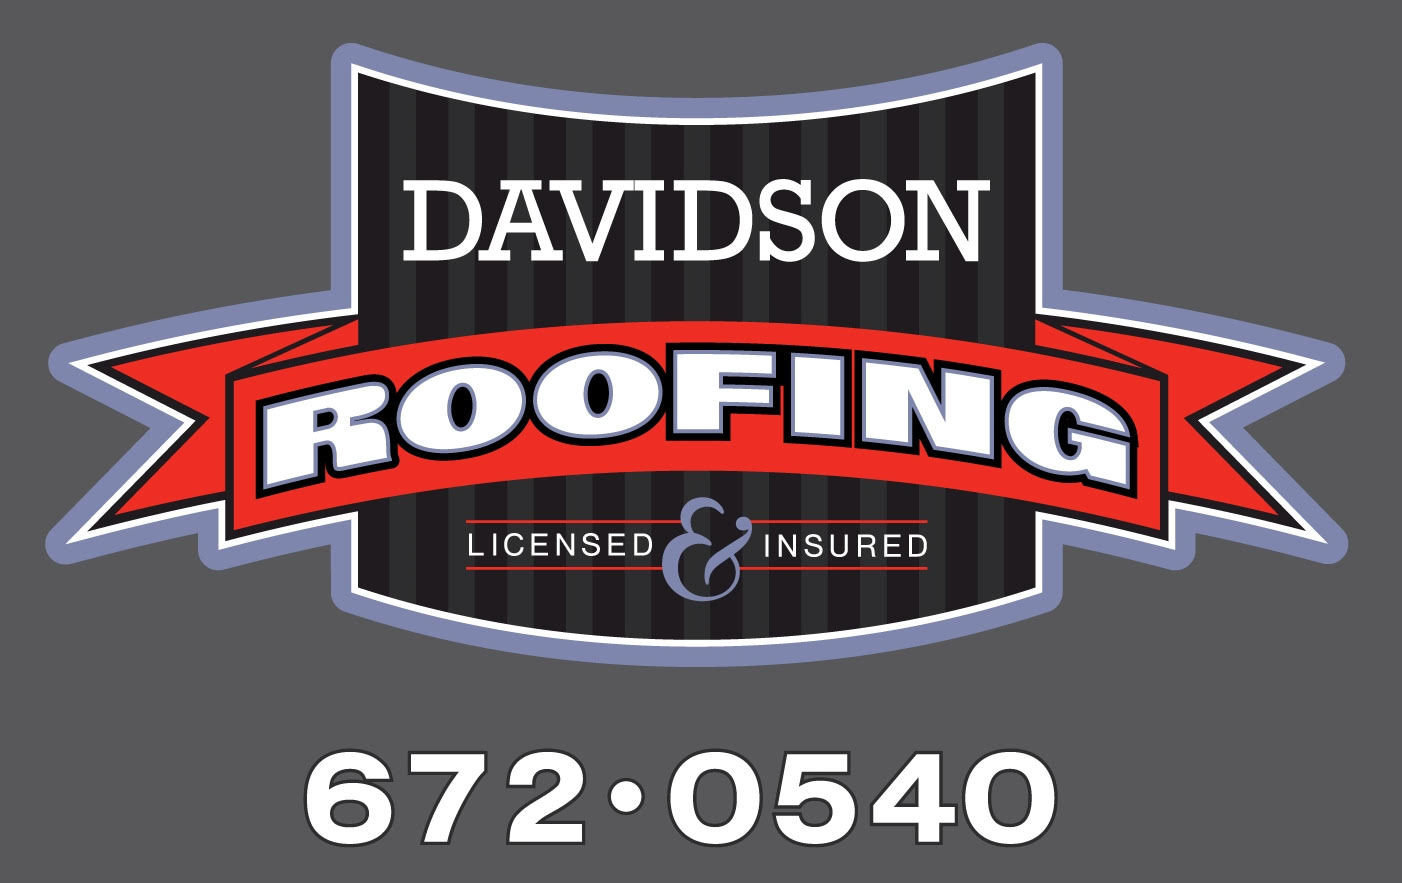 Davidson Roofing